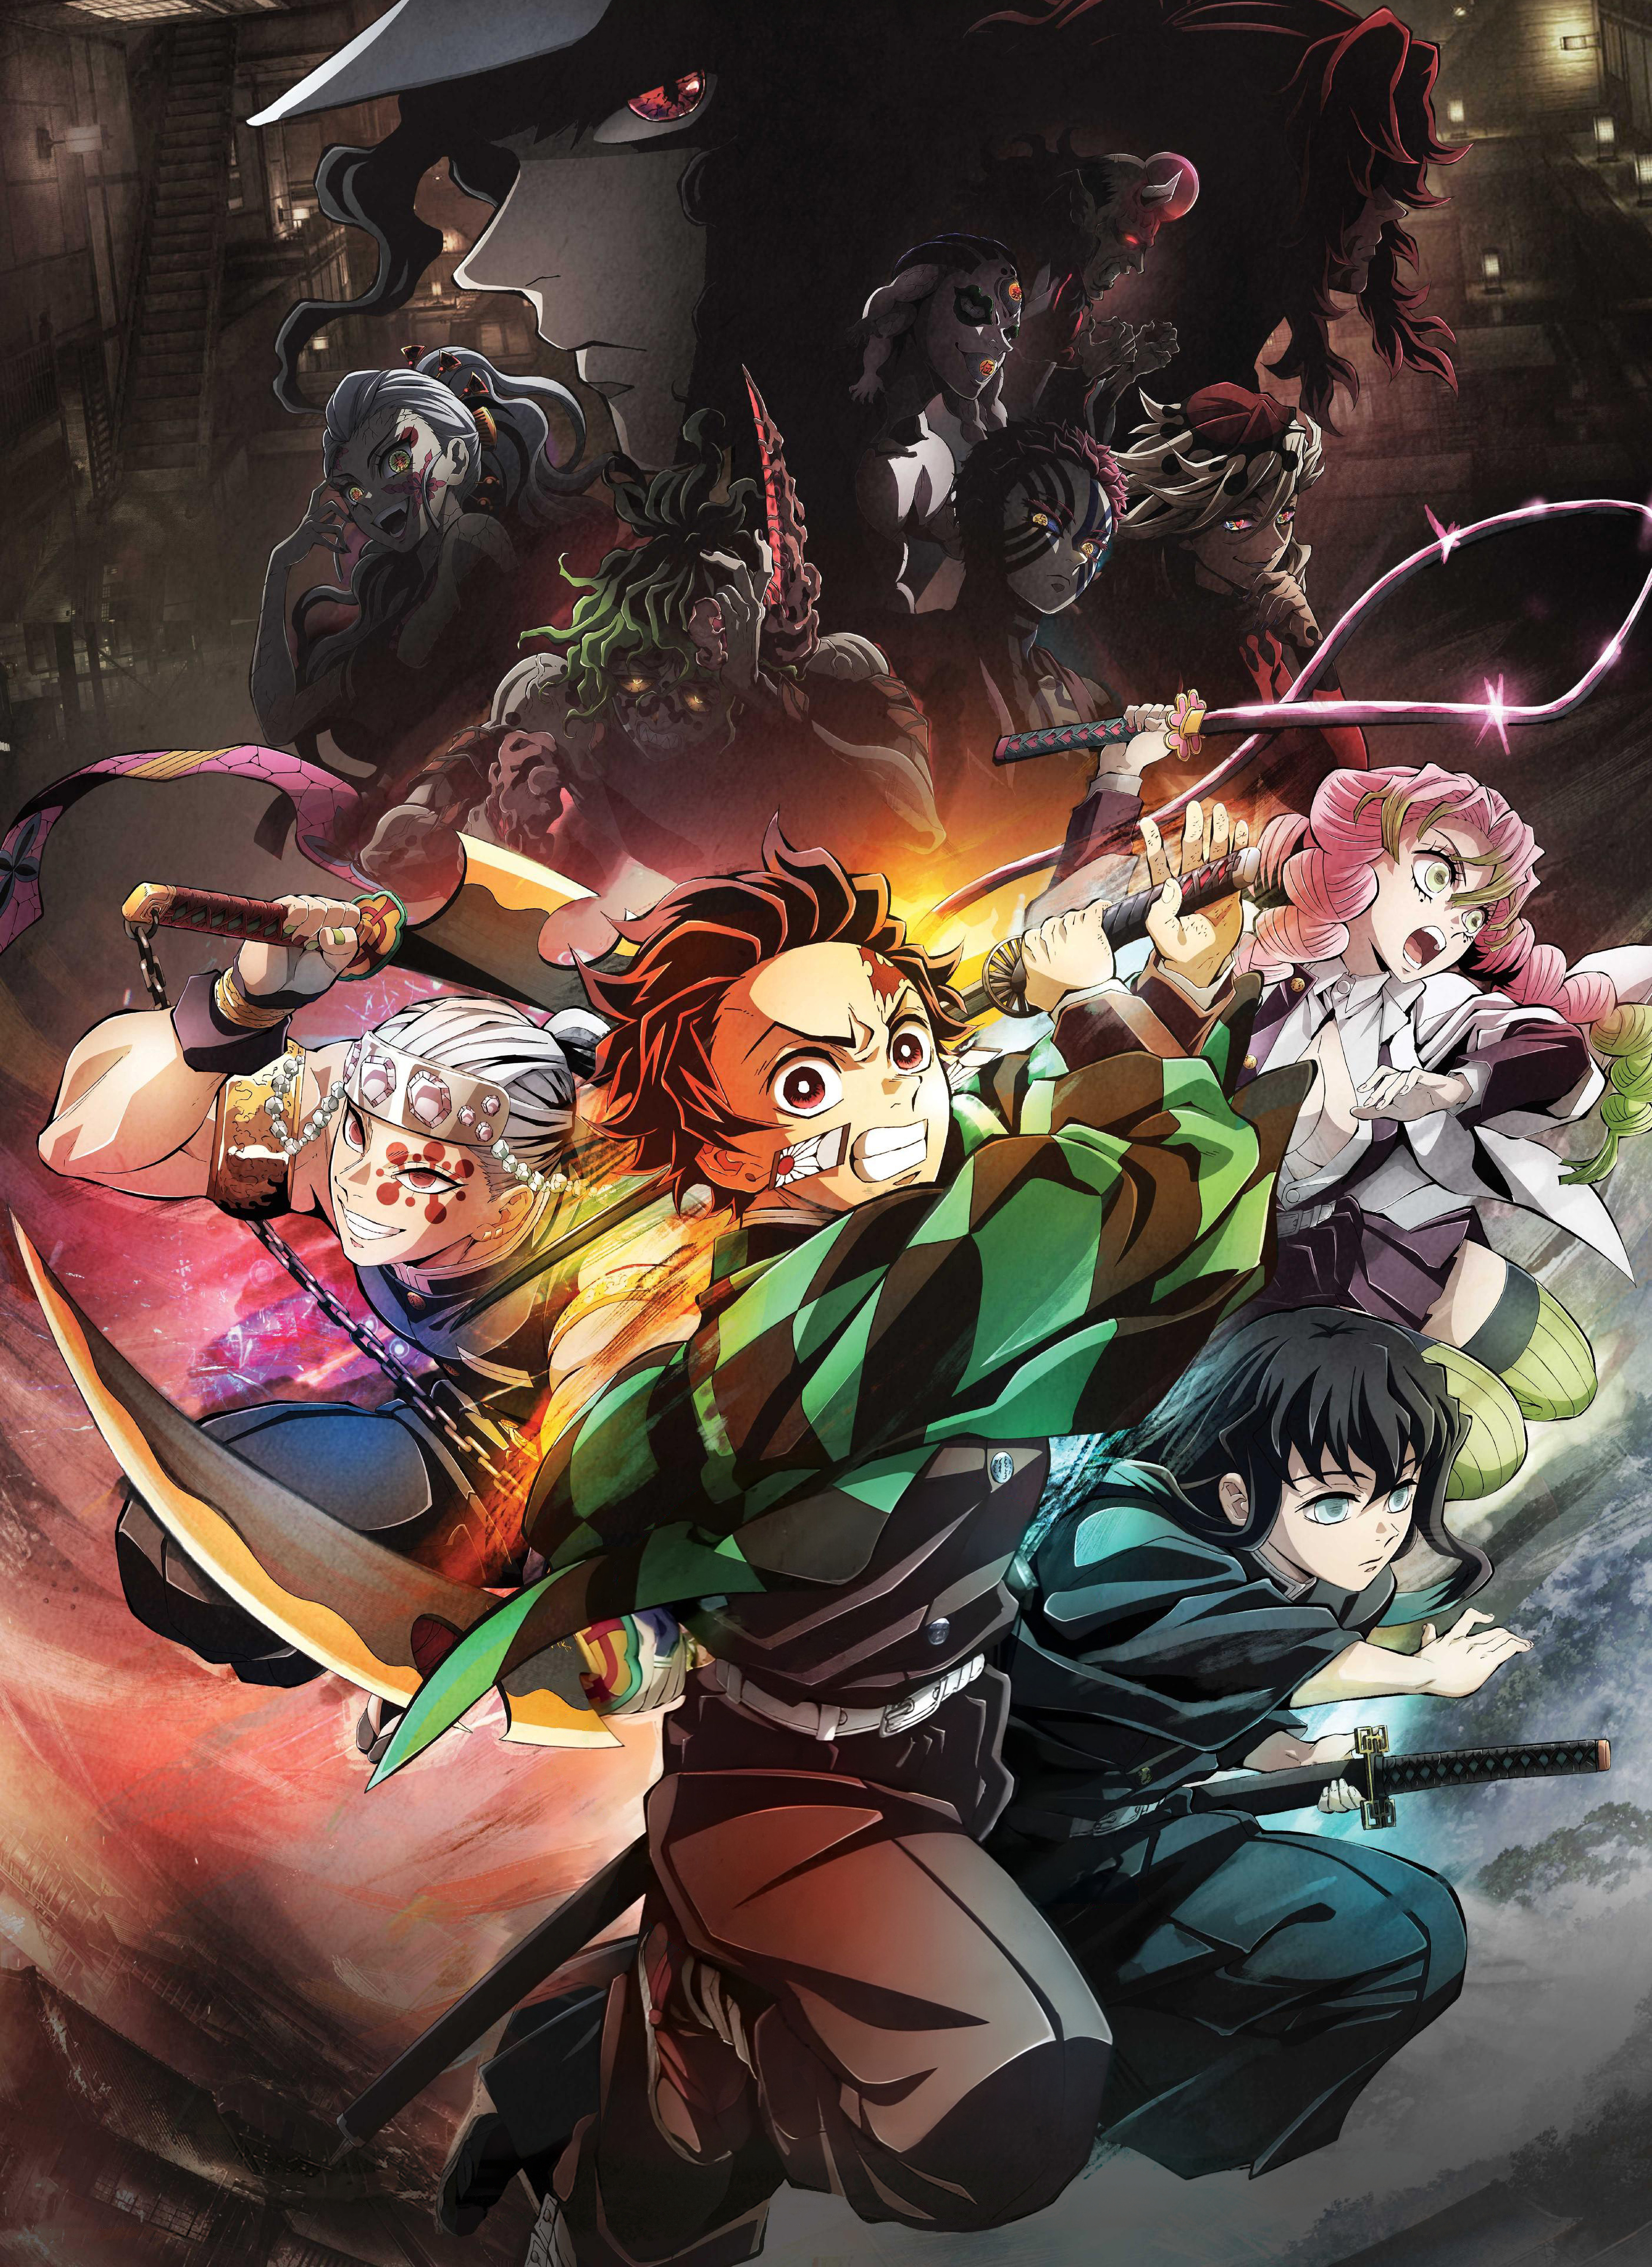 Demon Slayer Wallpaper Background, Animewallpaper, Pcwallpaper, Anime  Background Image And Wallpaper for Free Download